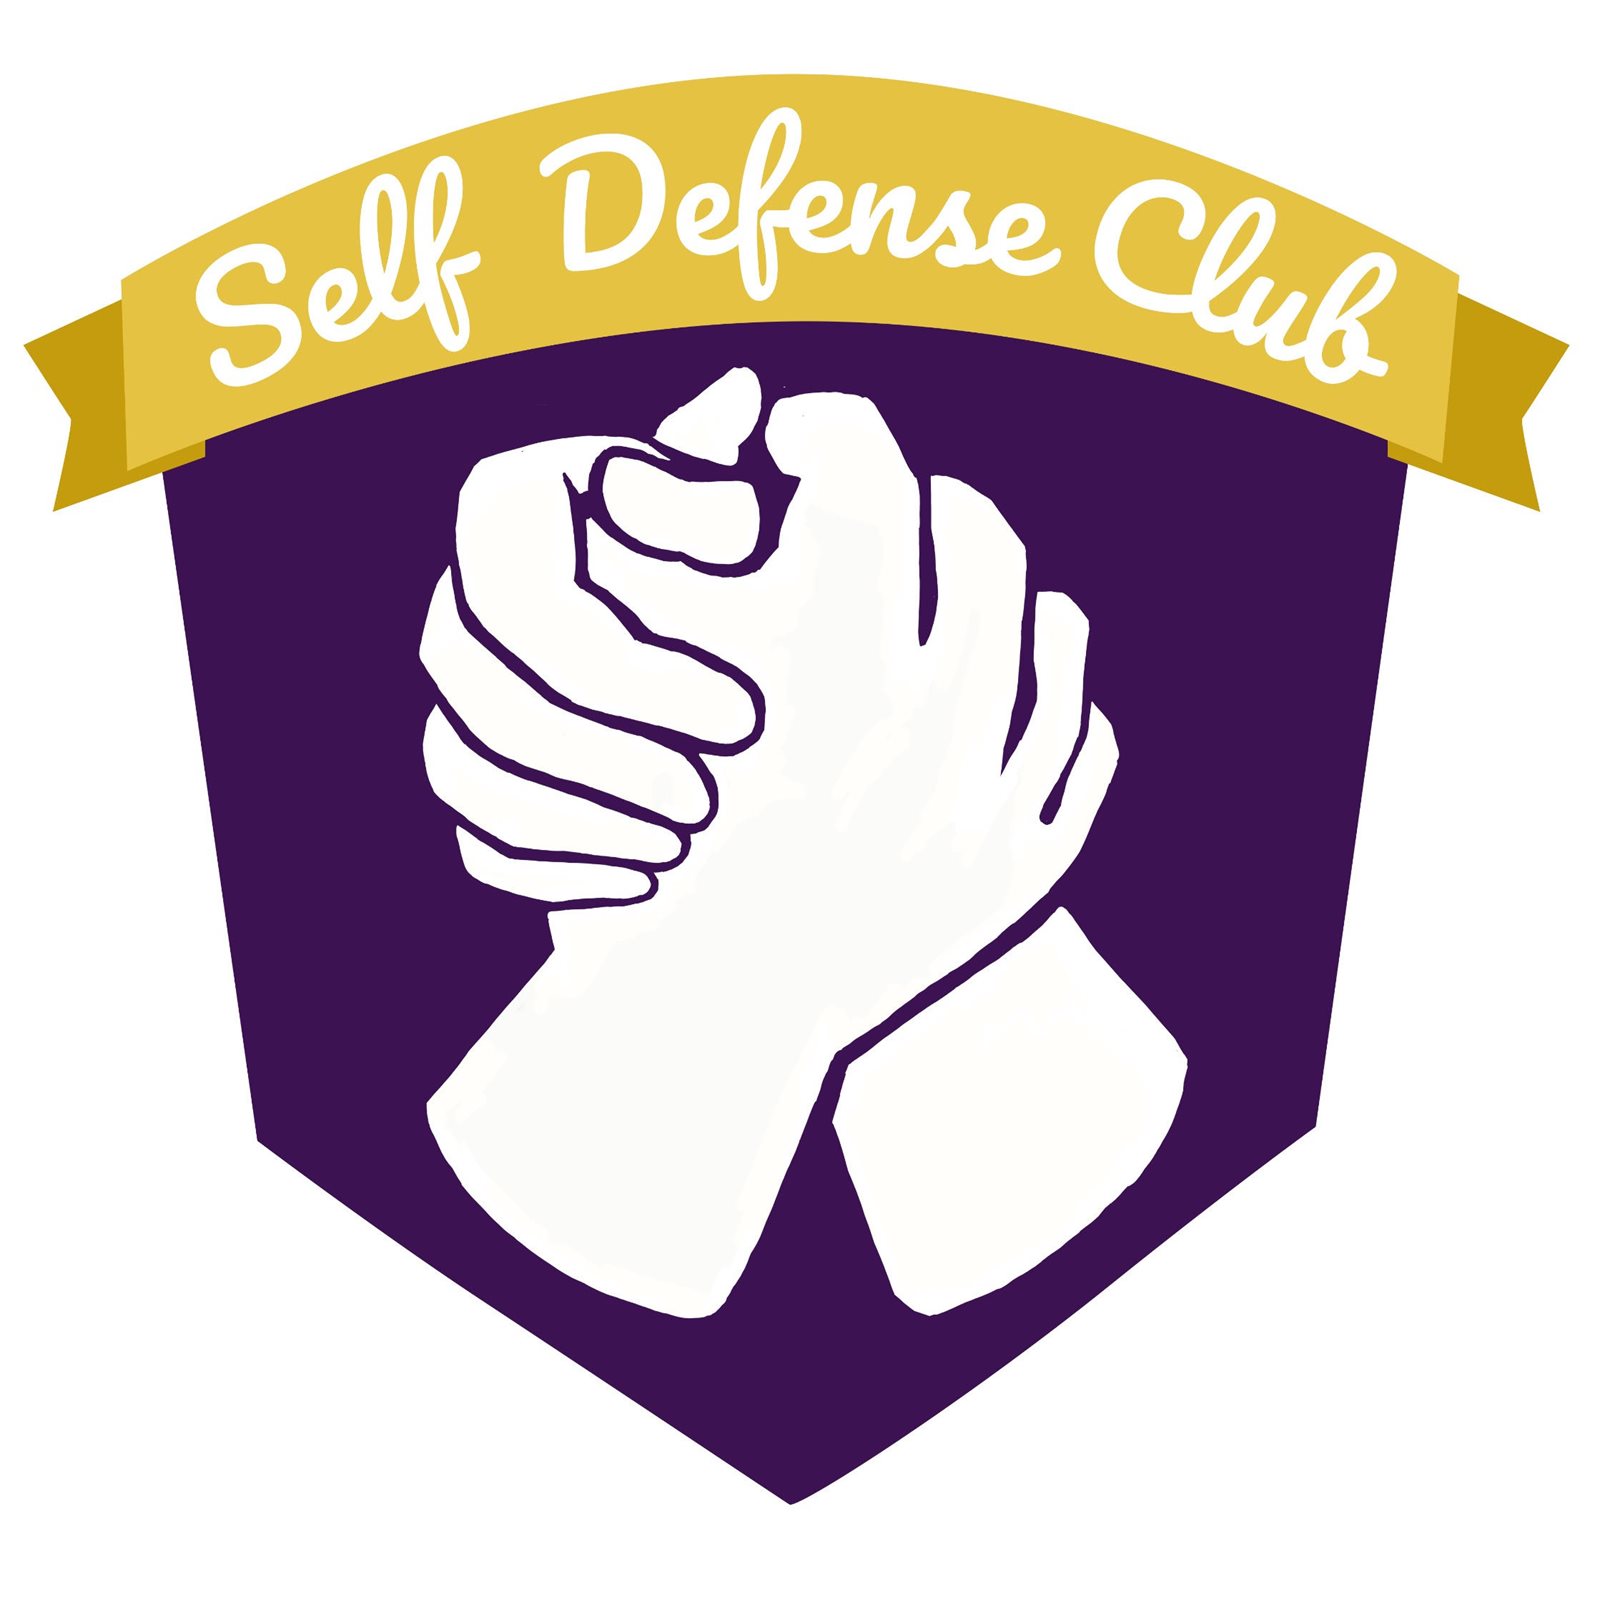 self defense club